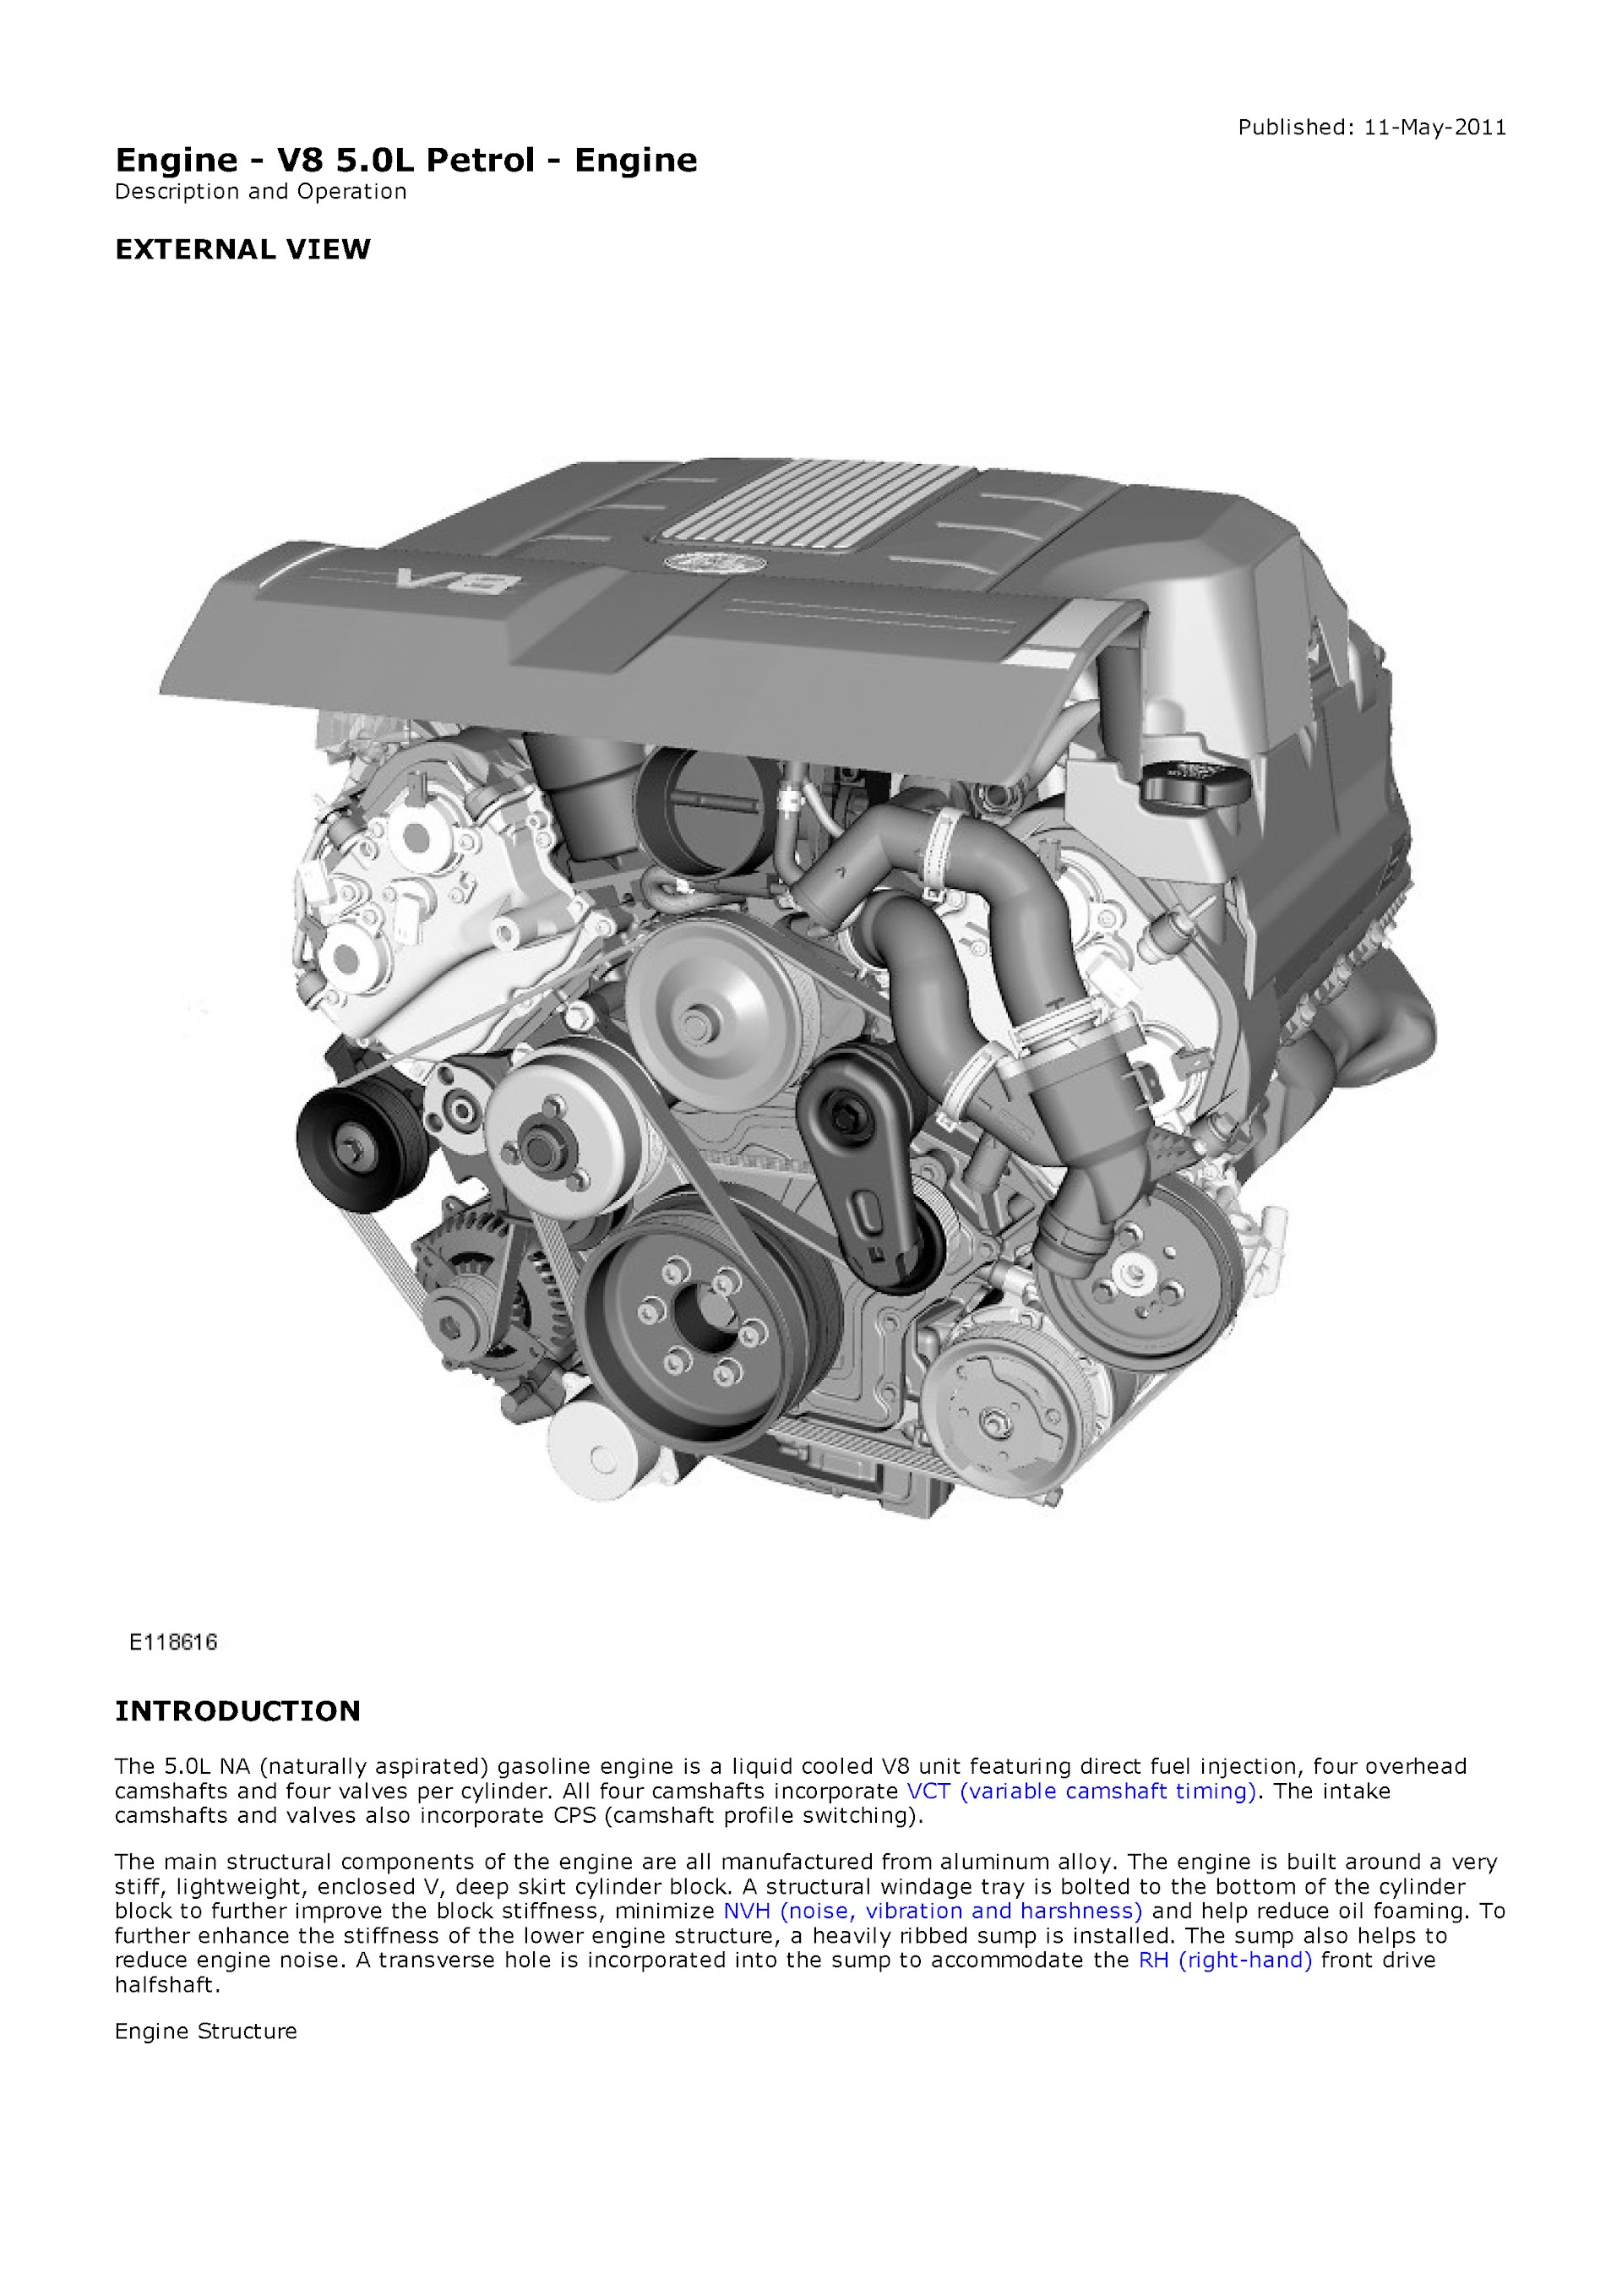 2010-2012 Range Rover L322 Repair Manual, Engine V8 5.0L Petrol